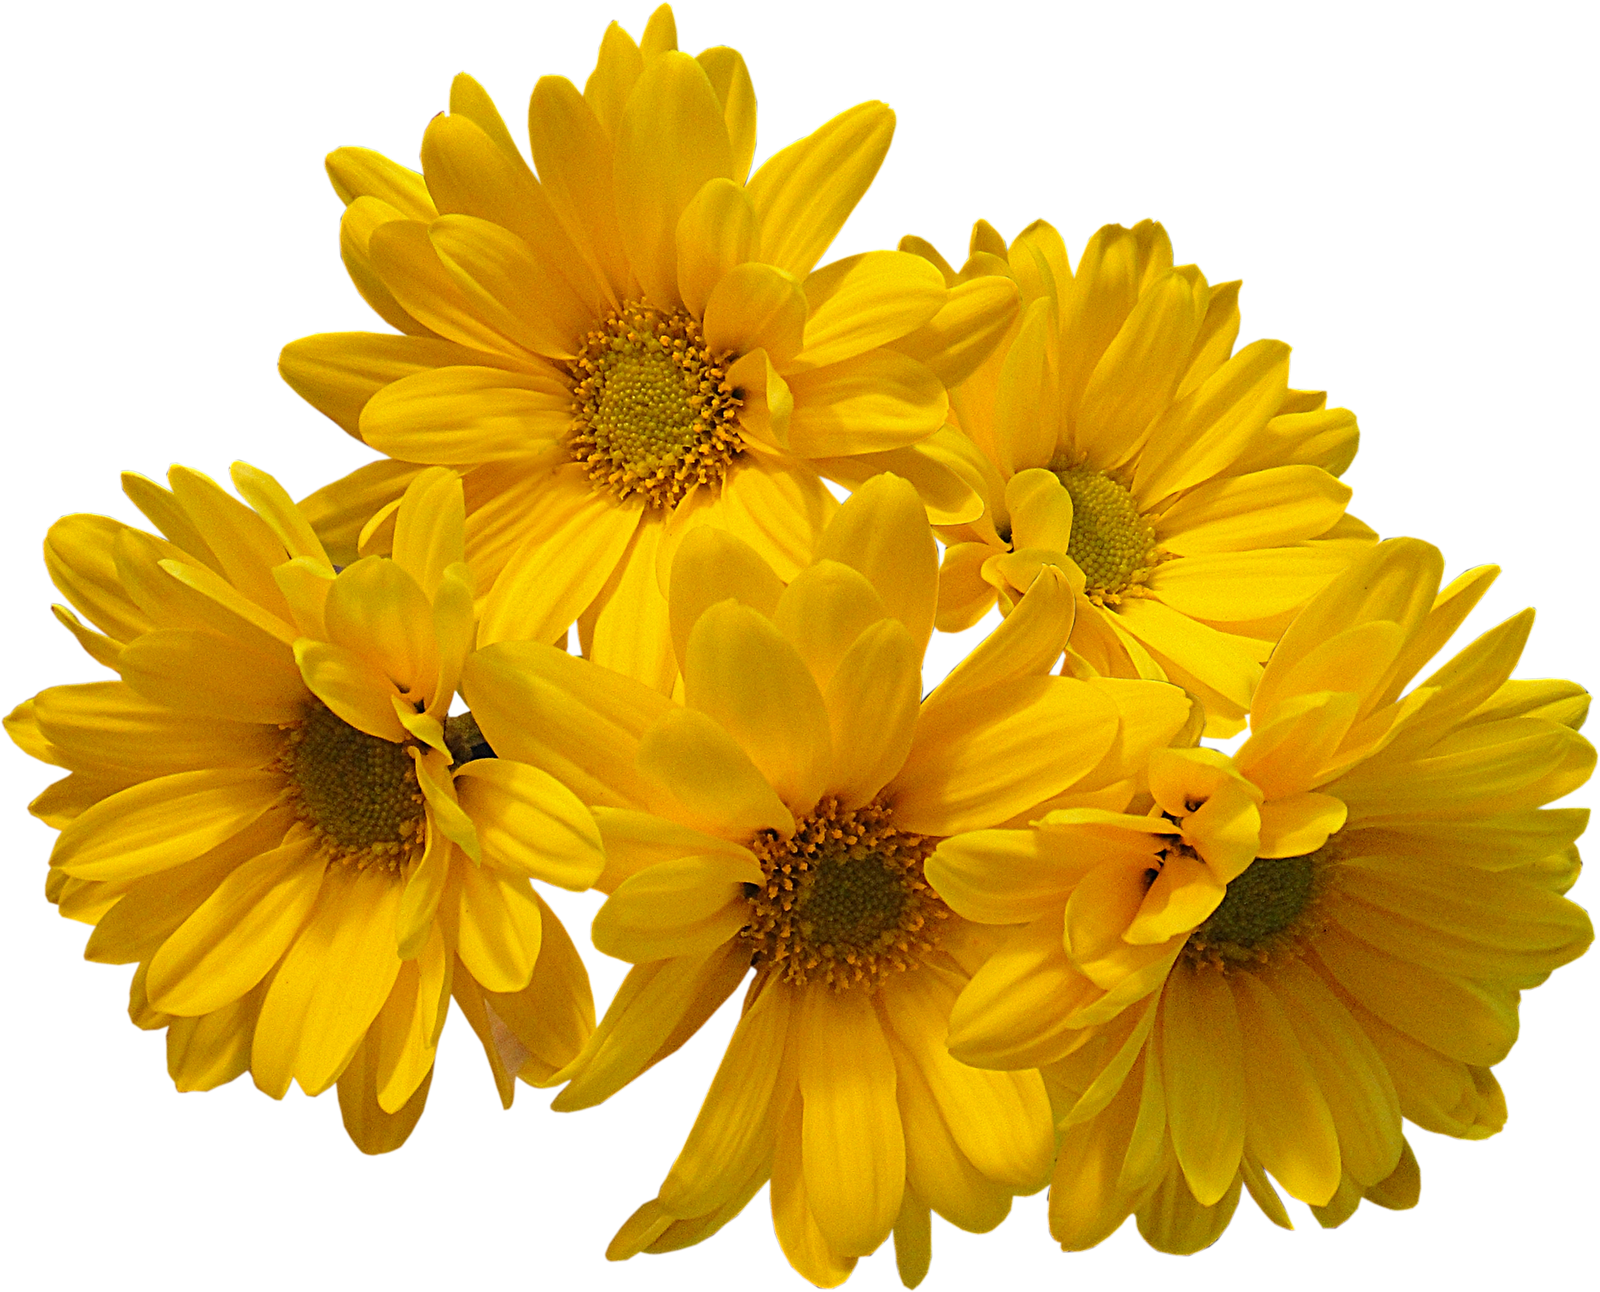 Download Yellow Flowers Bouquet Transparent Image HQ PNG Image FreePNGImg